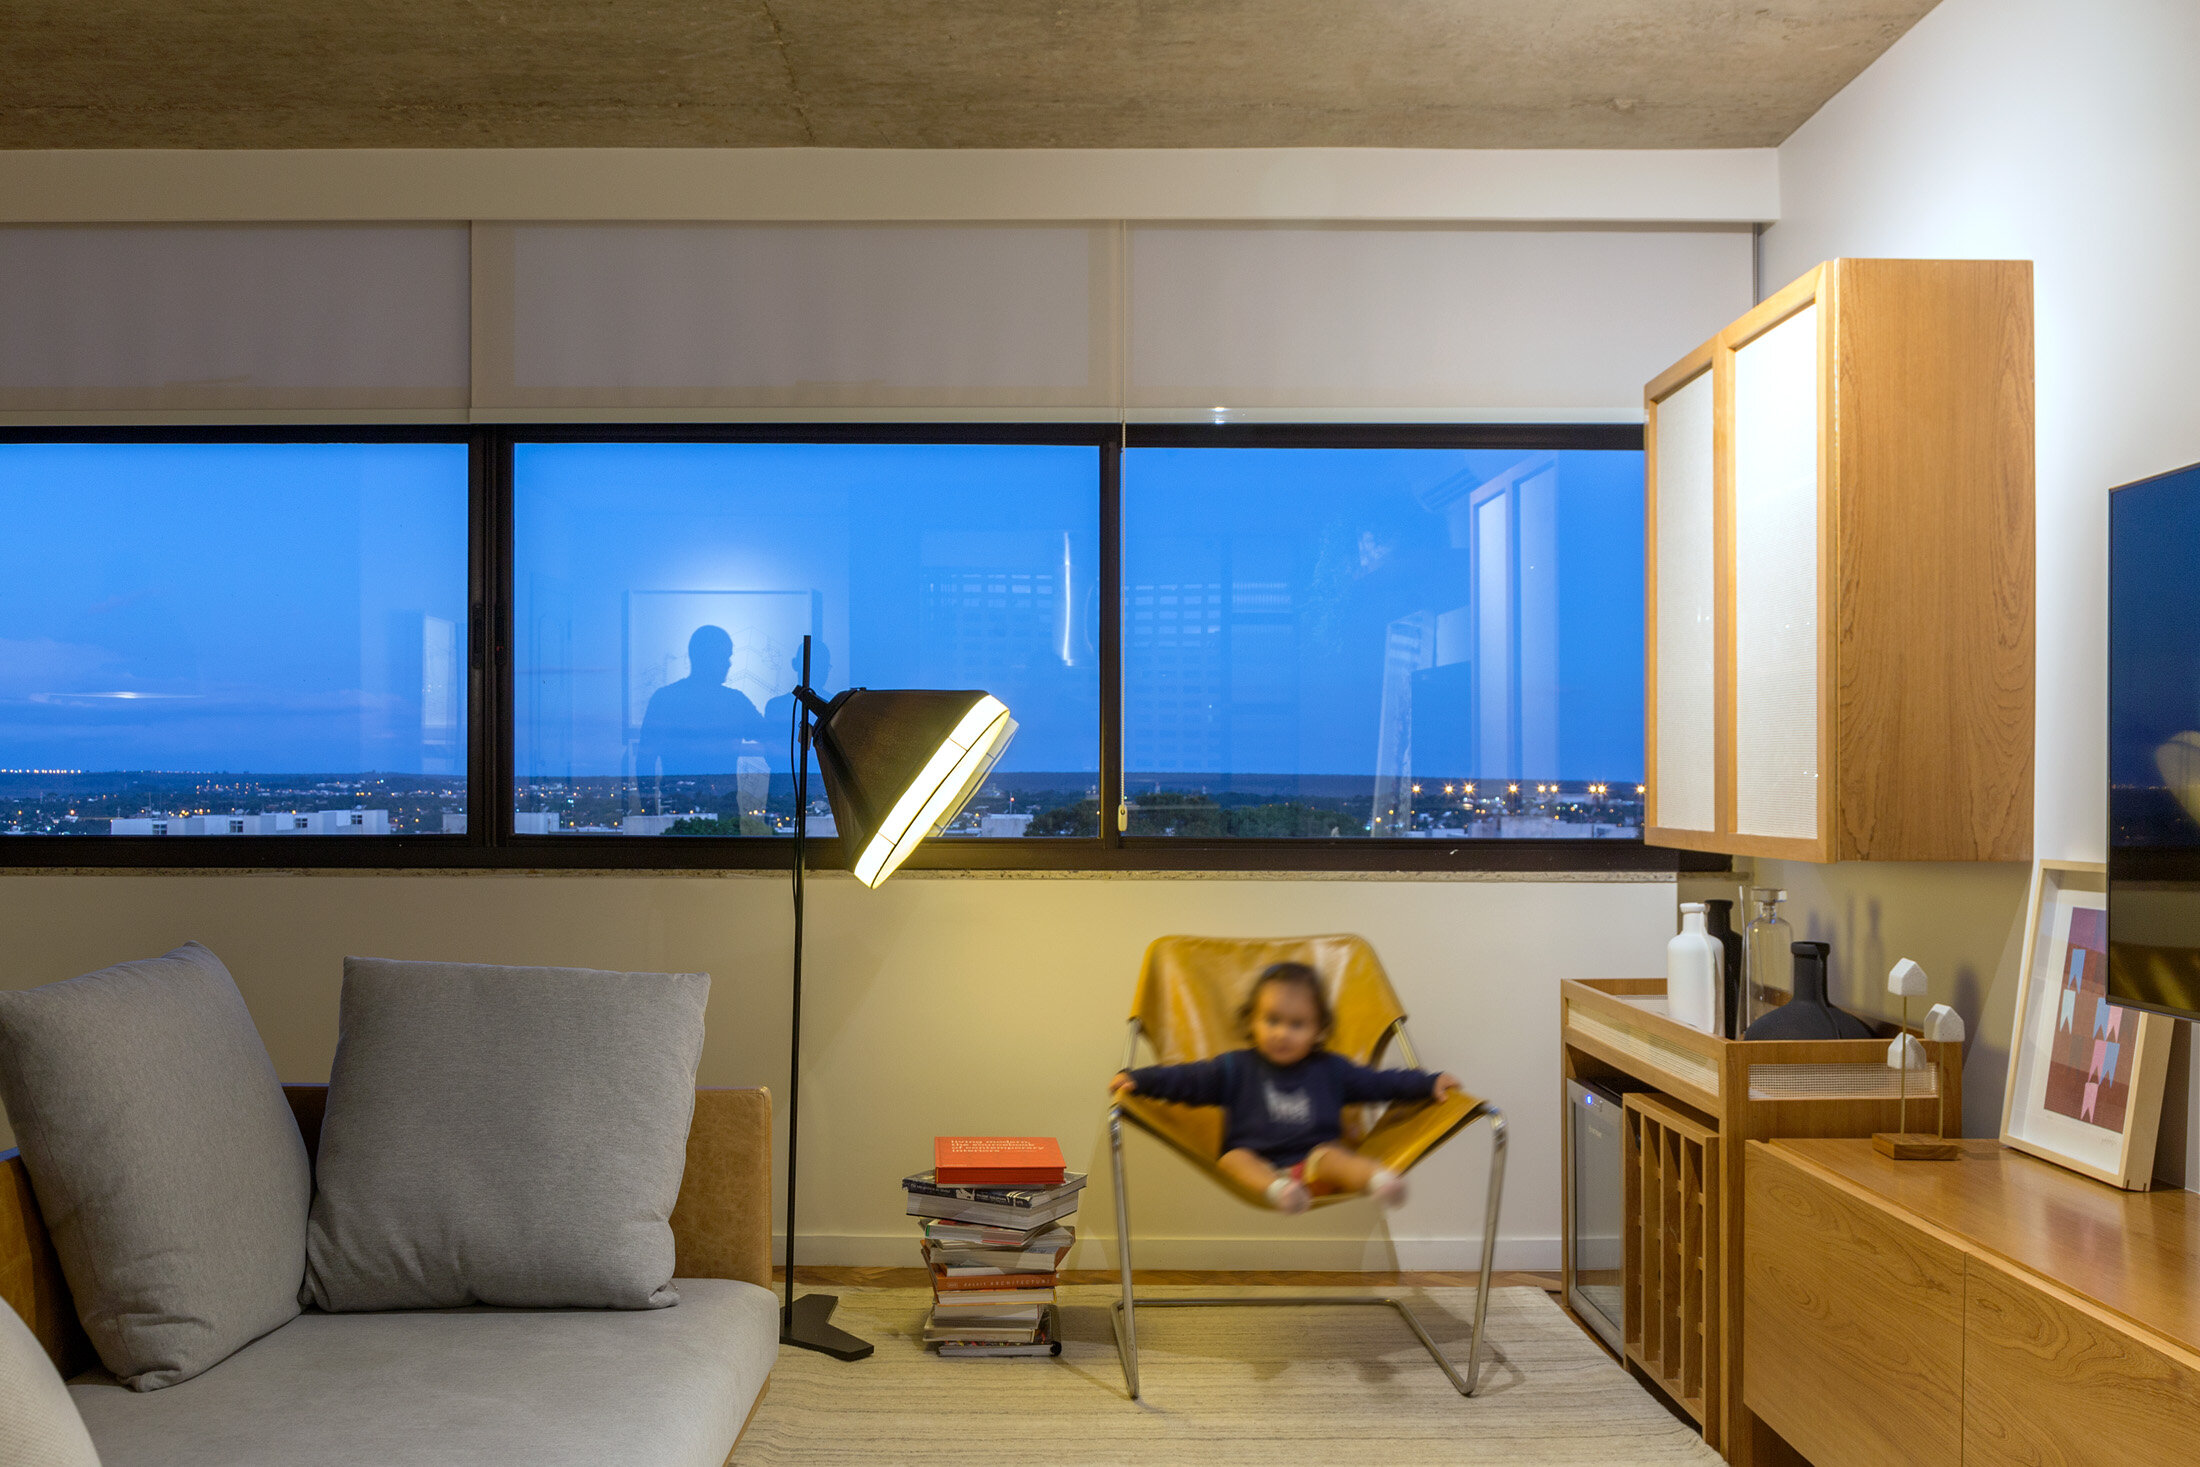 apartamento 115 s + sainz arquitetura + design + interior + brasilia + reforma + arquitetura34.jpg